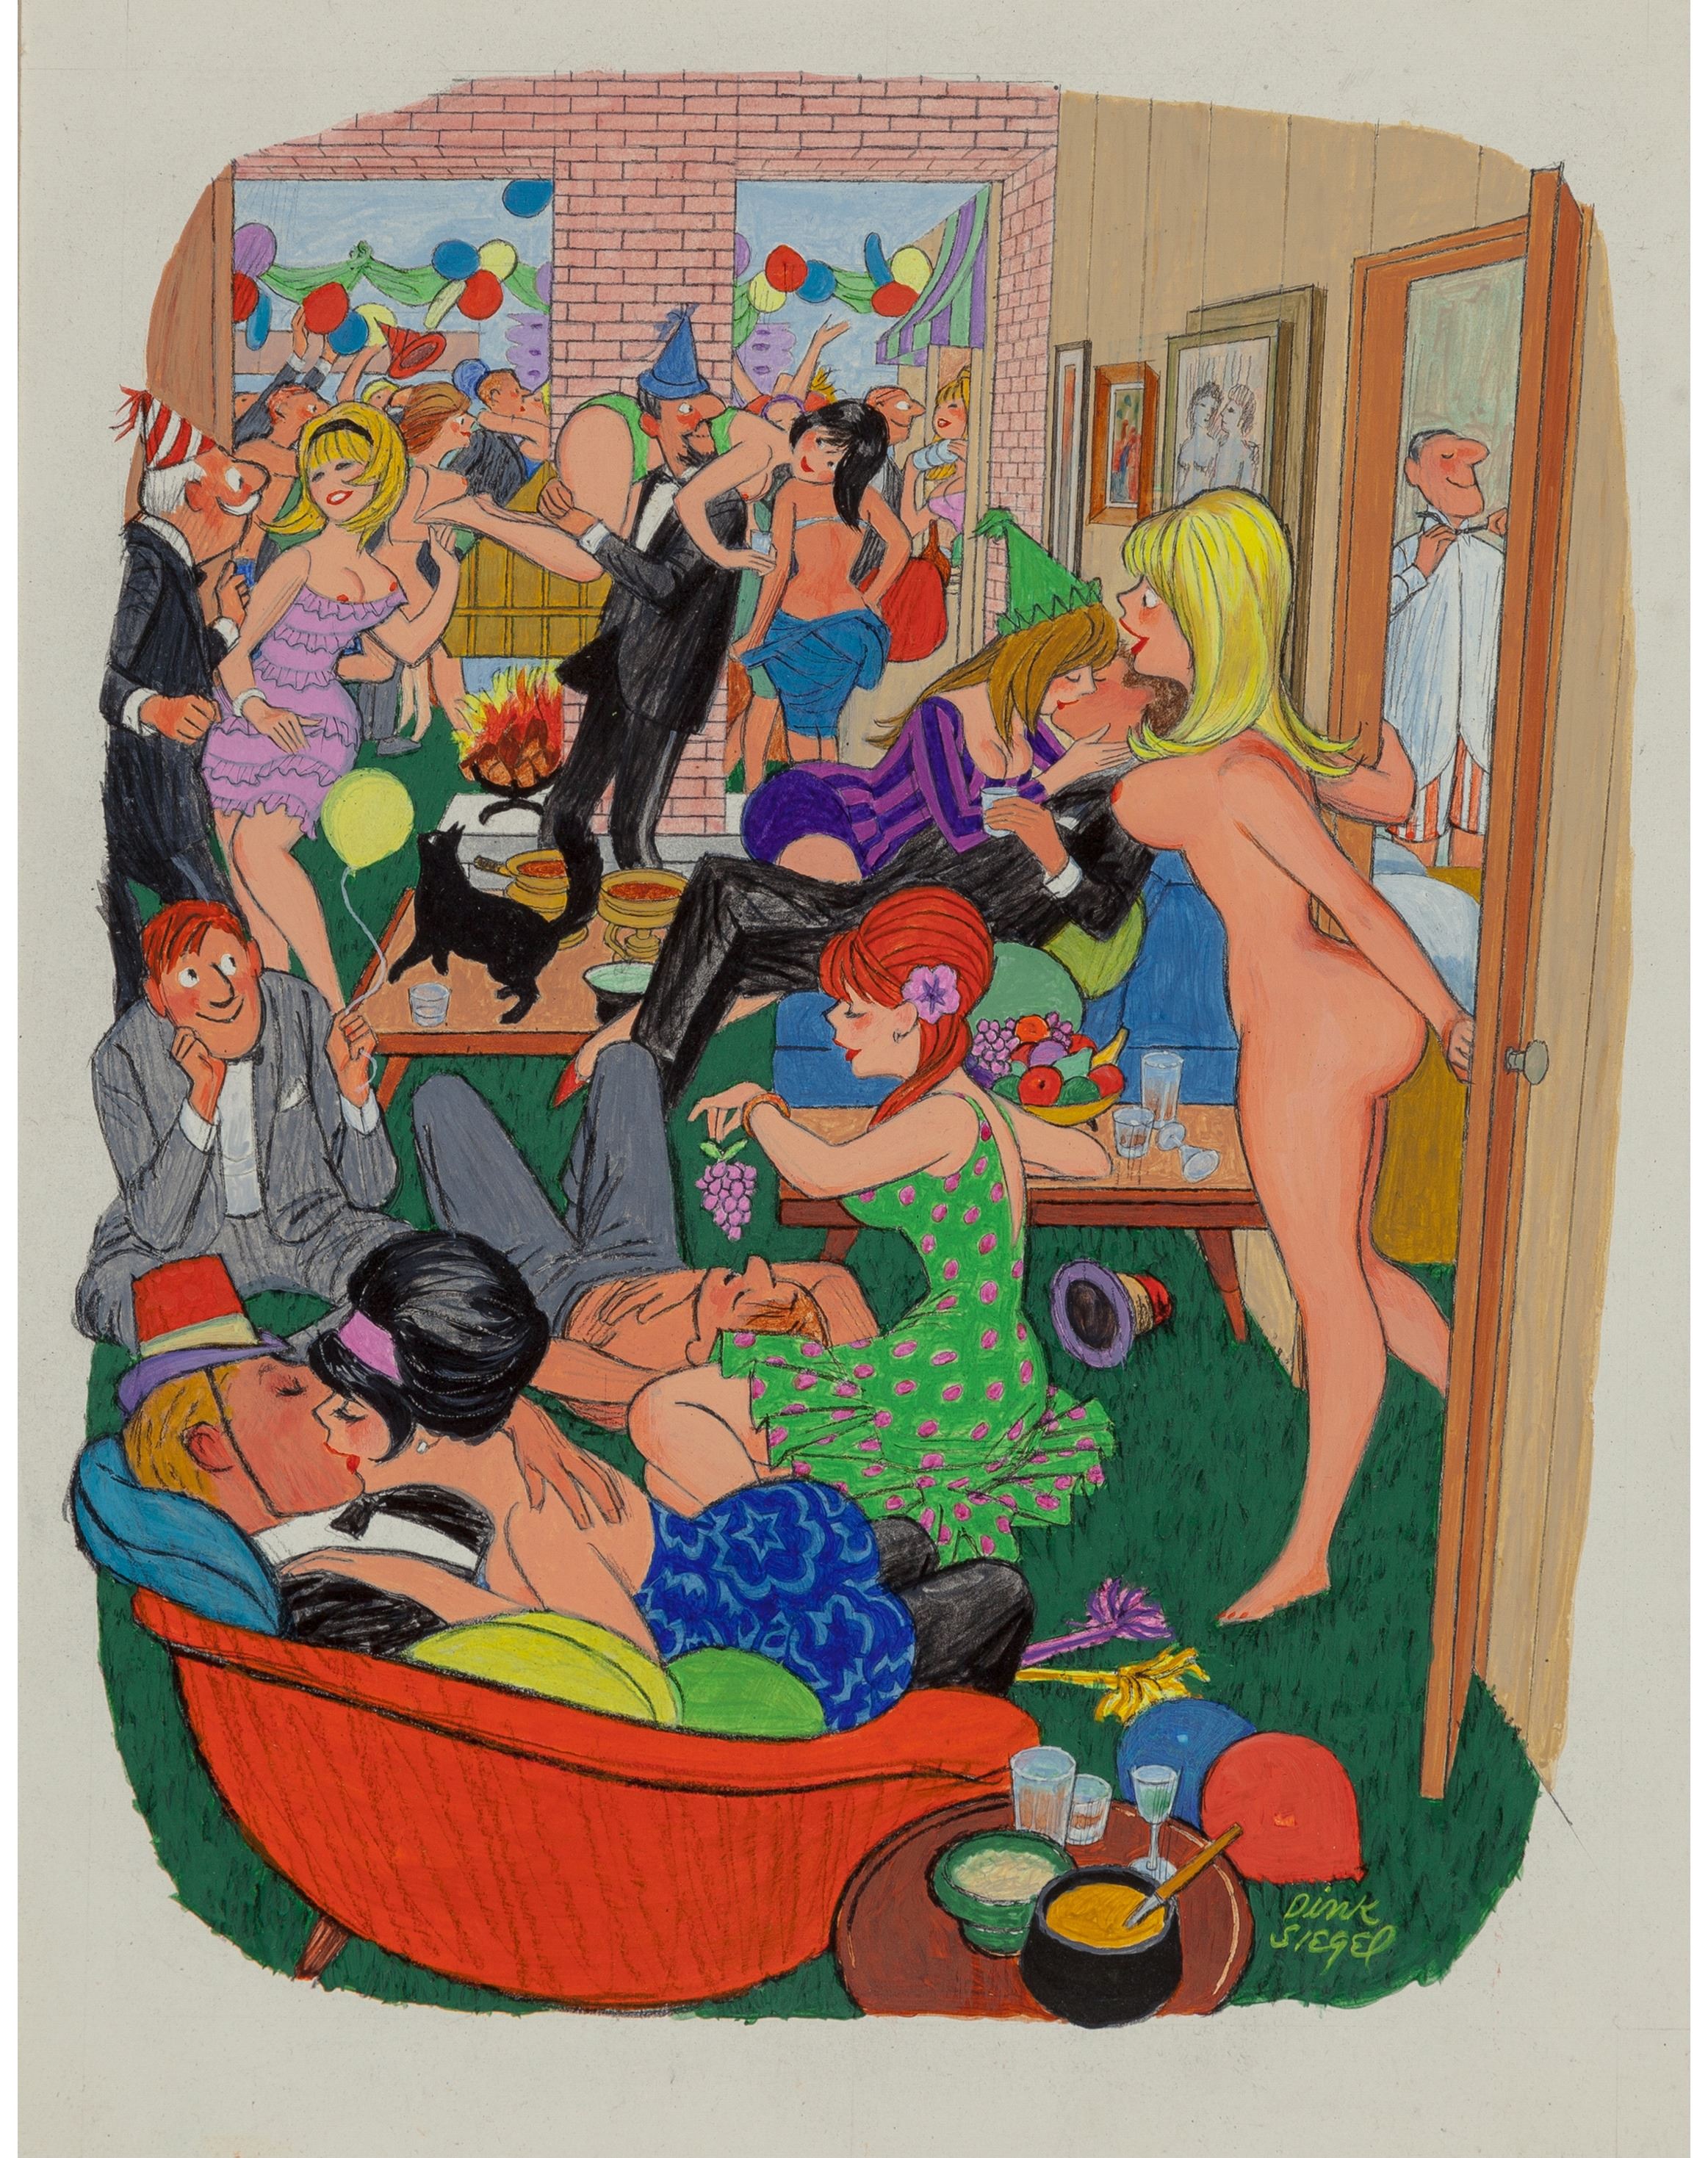 Swingers Party, Playboy cartoon (1966